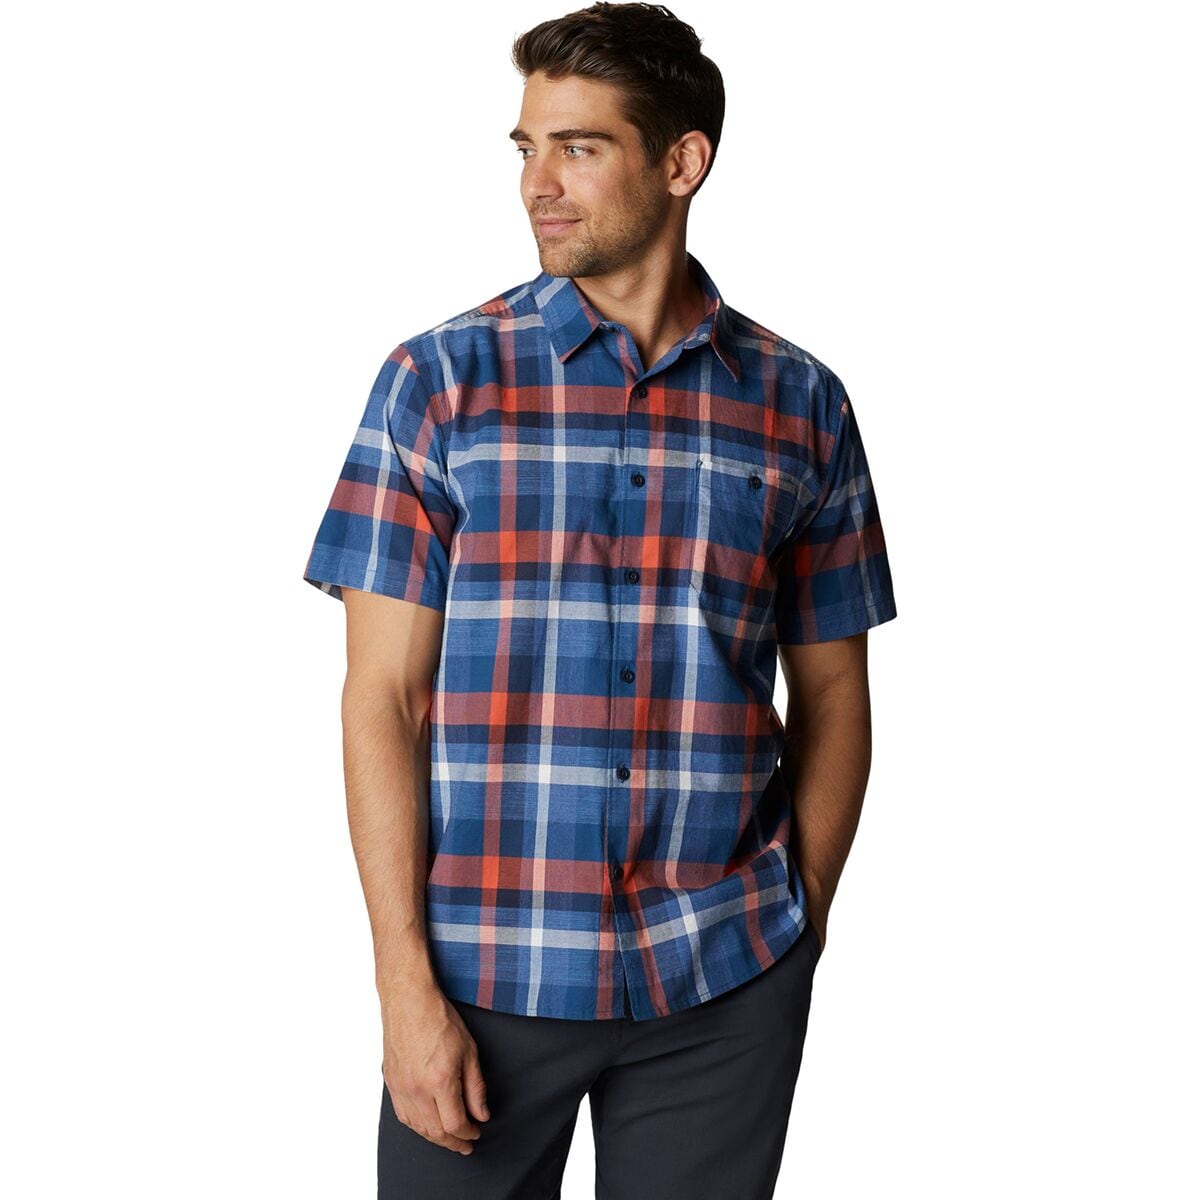 Big Cottonwood Short-Sleeve Shirt - Men